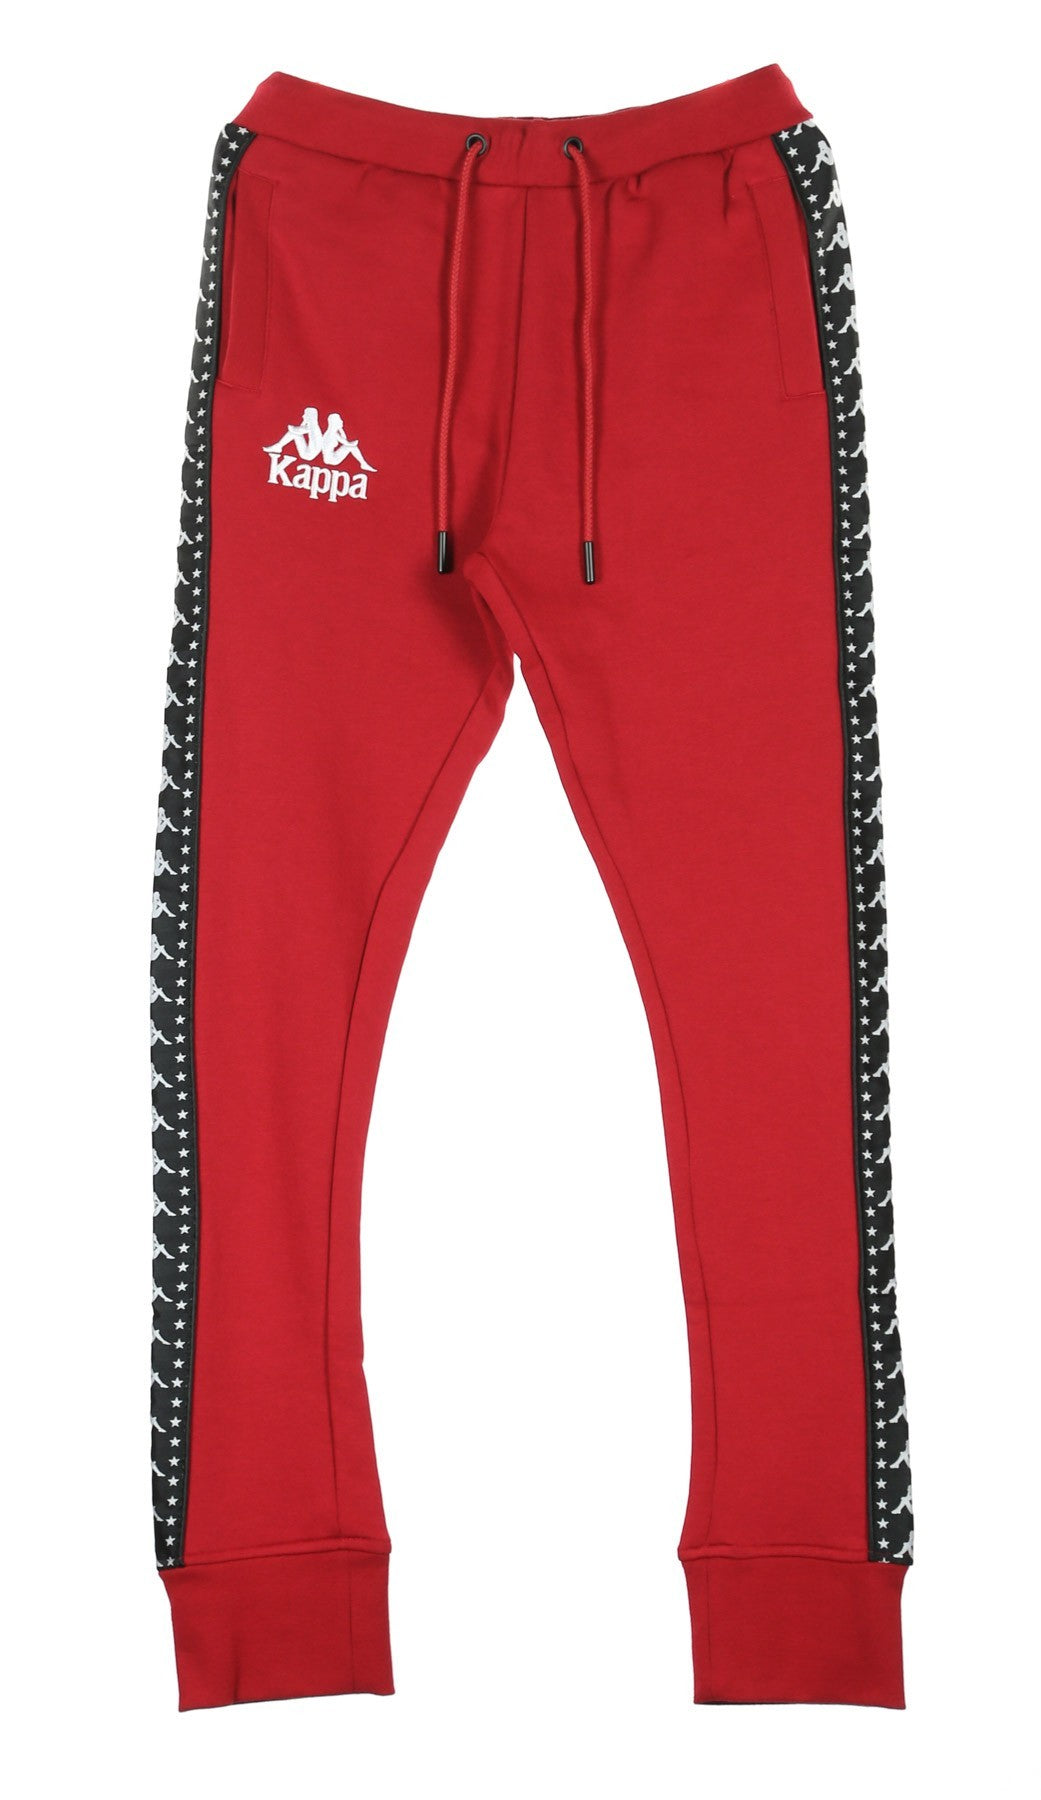 Authentic Amsag Men's Tracksuit Pants Red/black/white